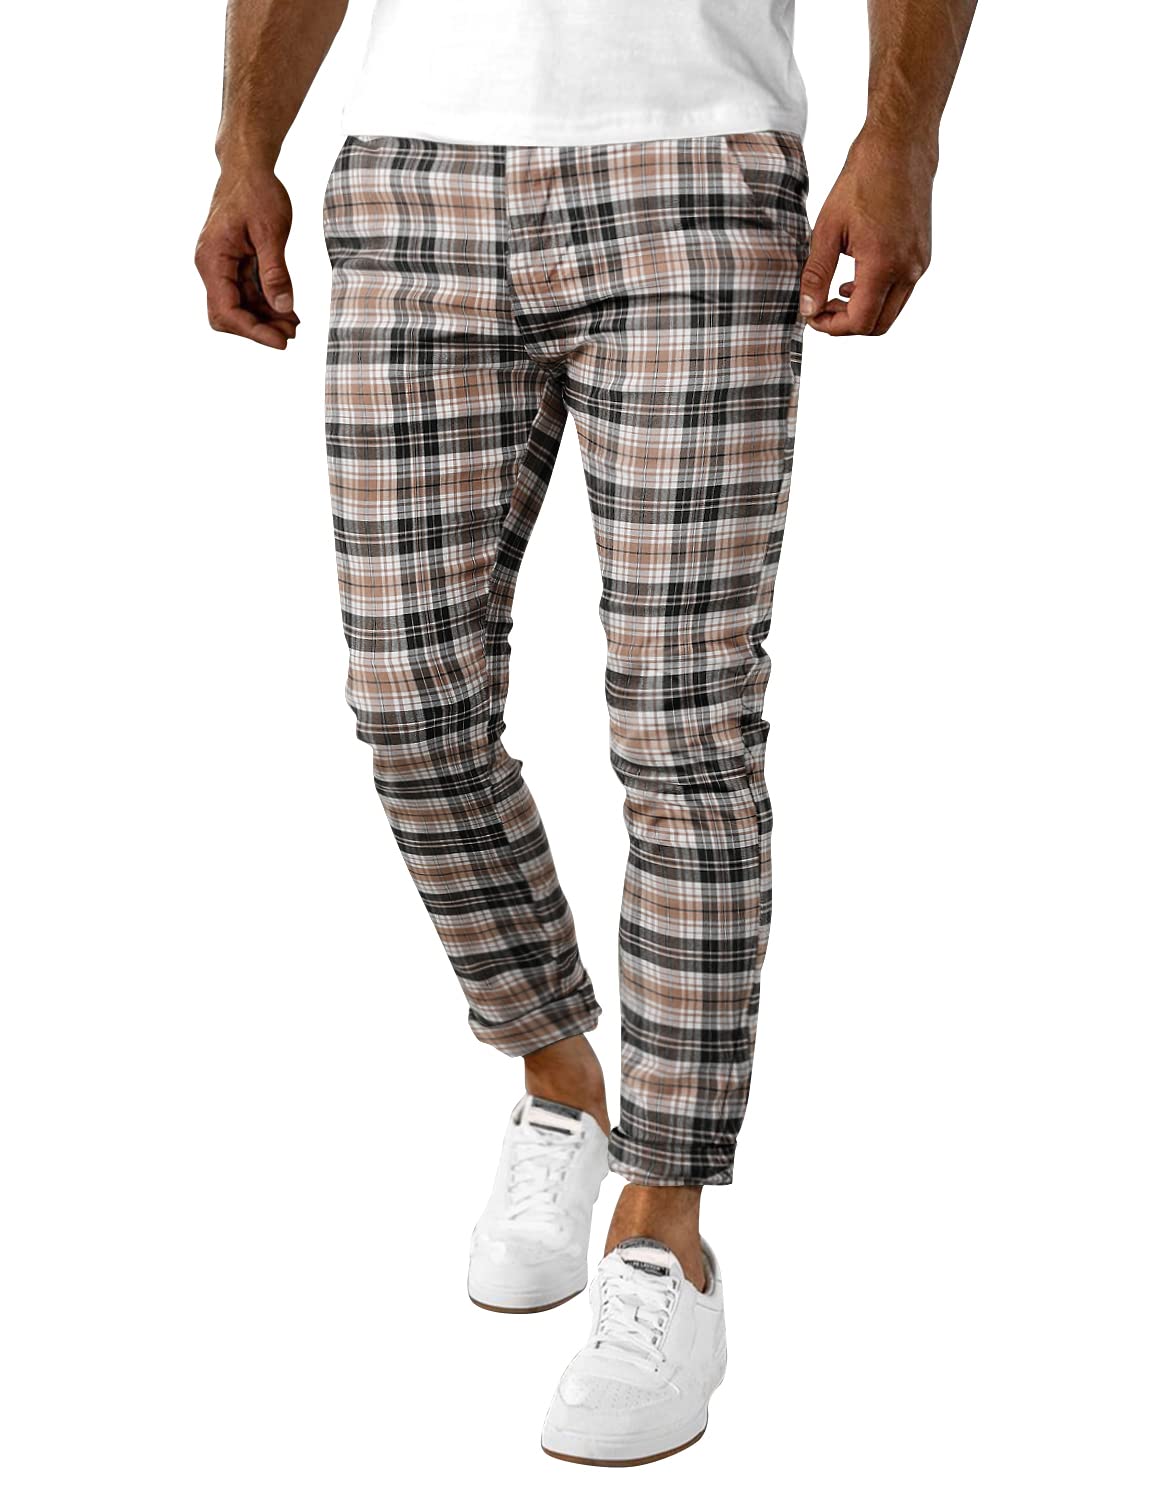 Mens Plaid Pants Slim Fit Casual Stretch Pants Tapered Skinny Checkered Dress  Pants for Men, Black Big Plaid, S price in UAE | Amazon UAE | kanbkam